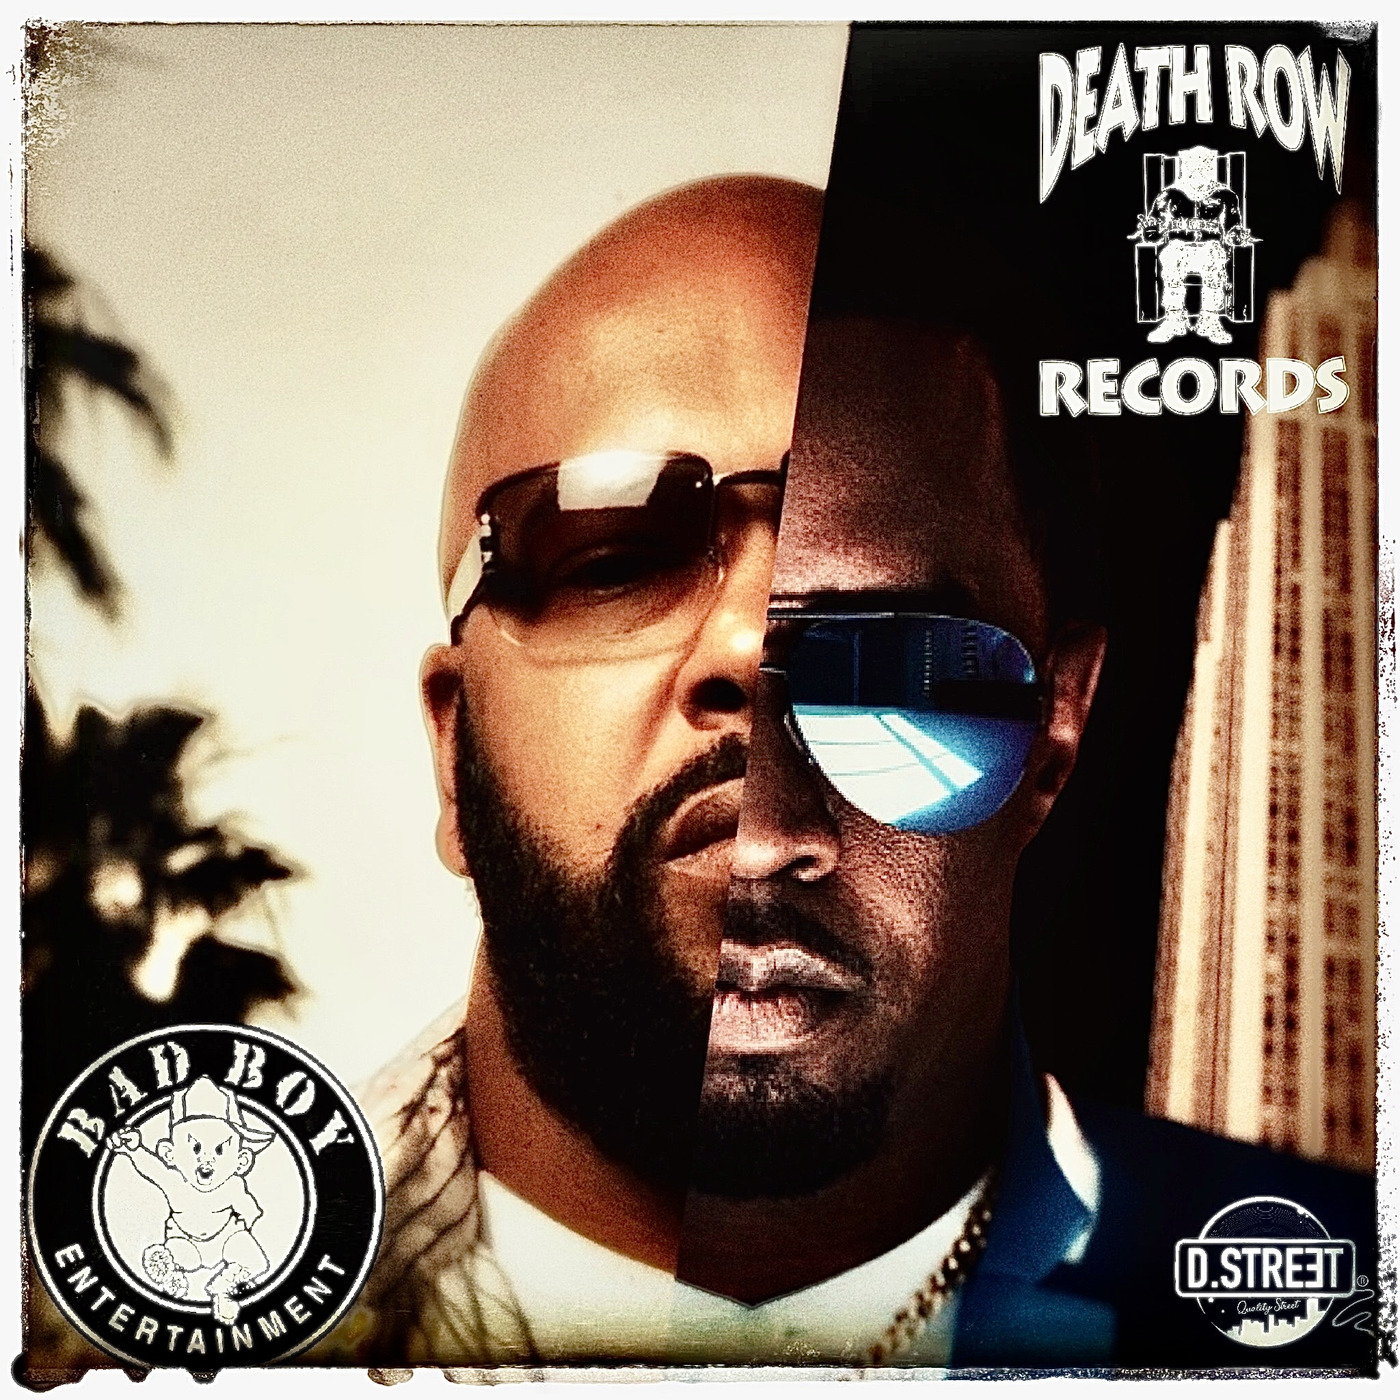 DJ D.Street - Bad Boy VS Death Row